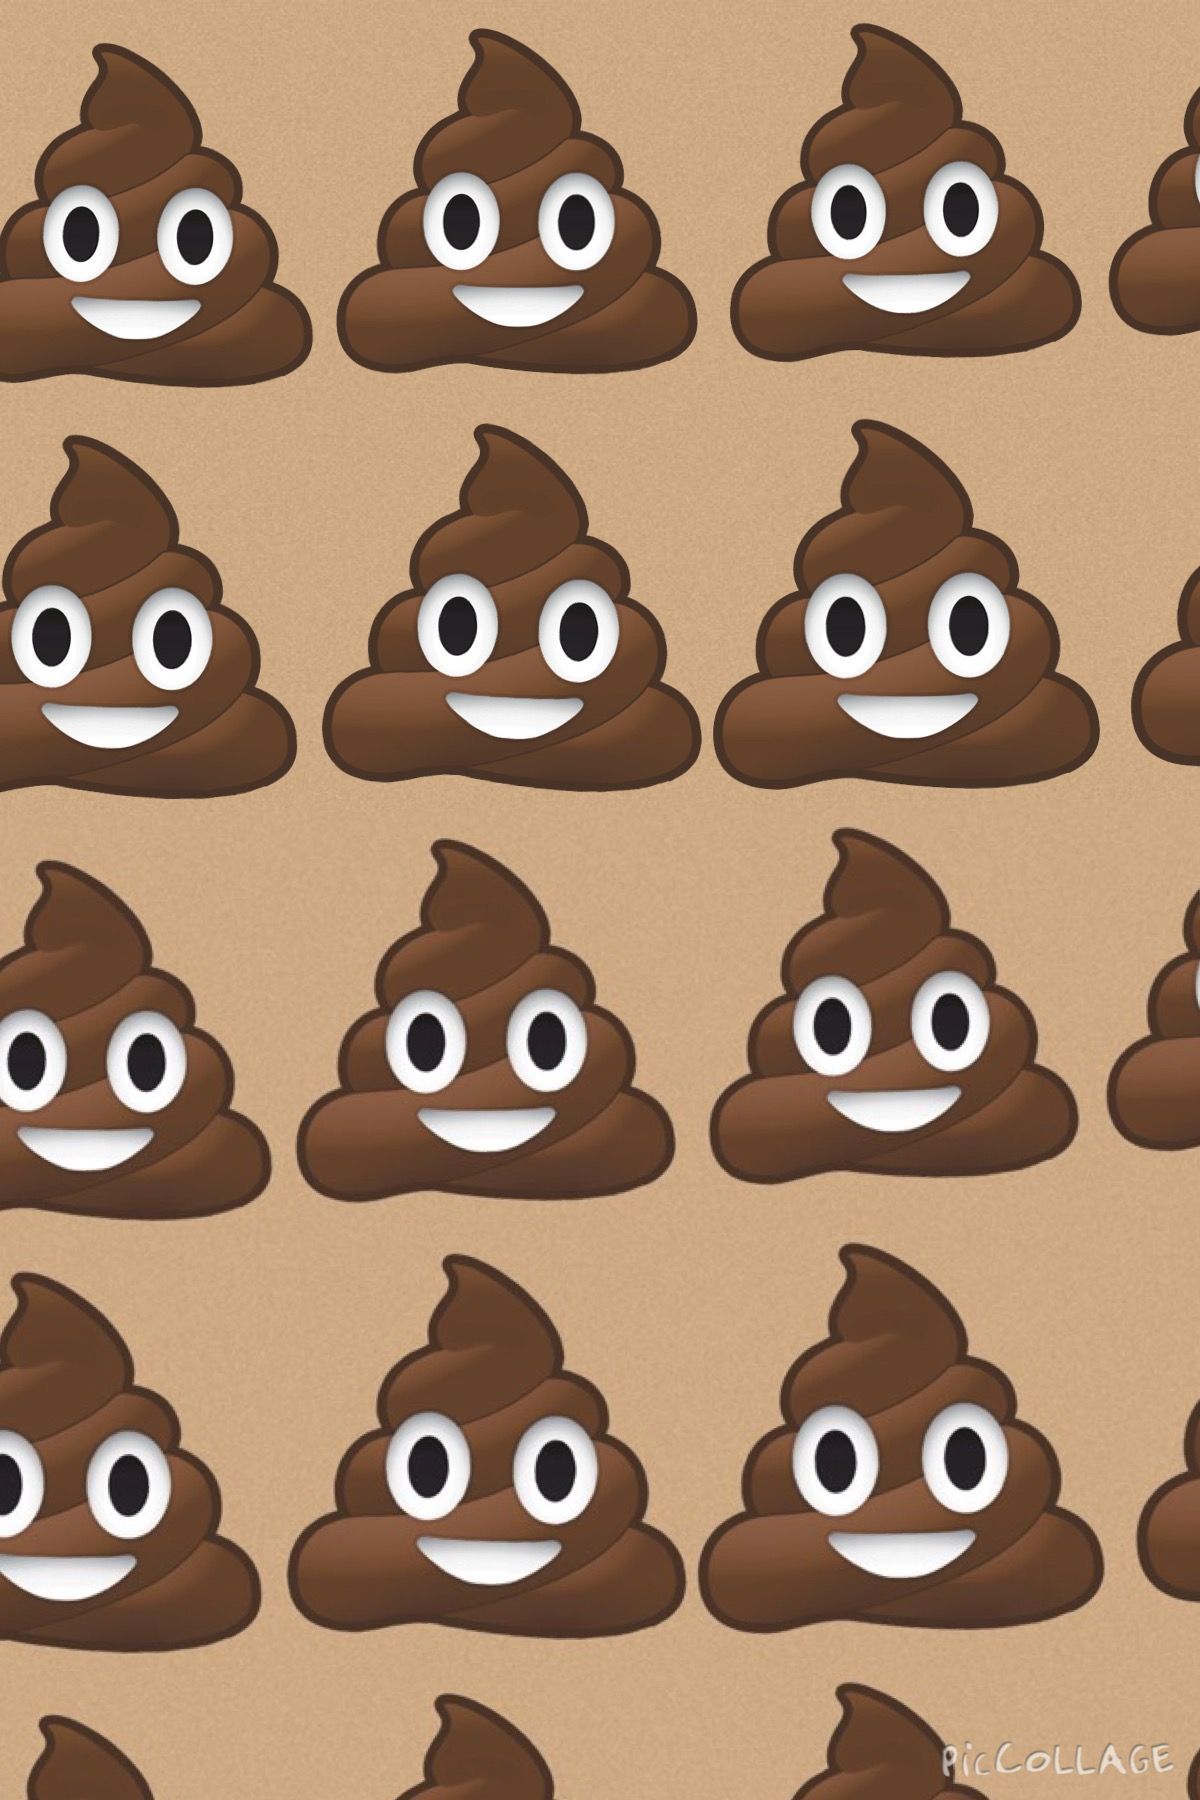 Poop Emojis Wallpapers Wallpaper Cave